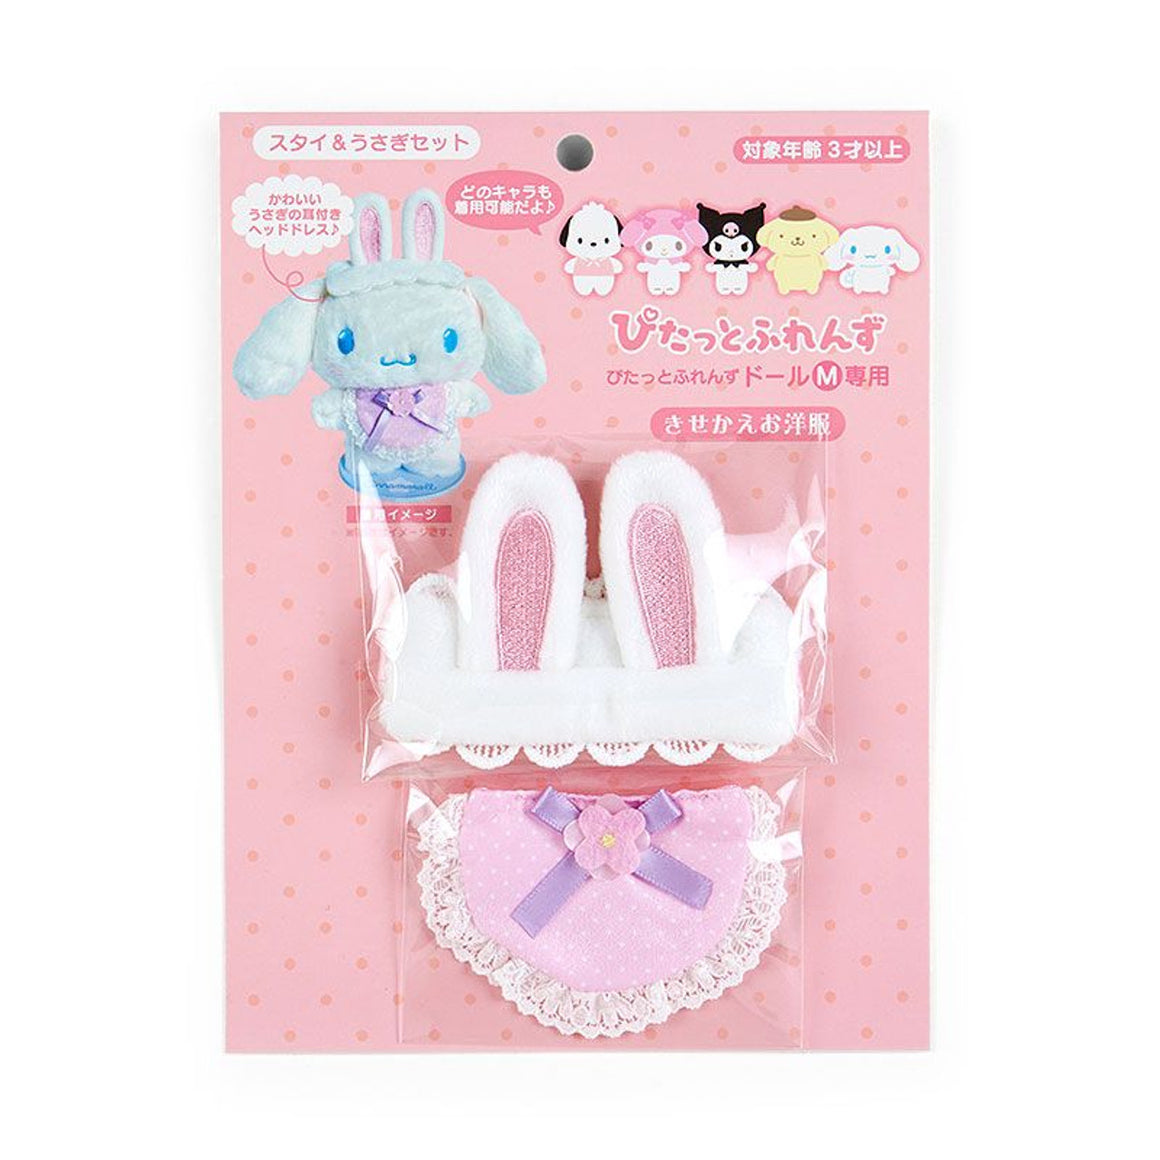 SANRIO Dress-up Clothes For Plush Toy Dress With Headband- Rabbit Set My Meoldy (Pitatto Friends) 三丽鸥 美乐蒂小花粉色裙子服装